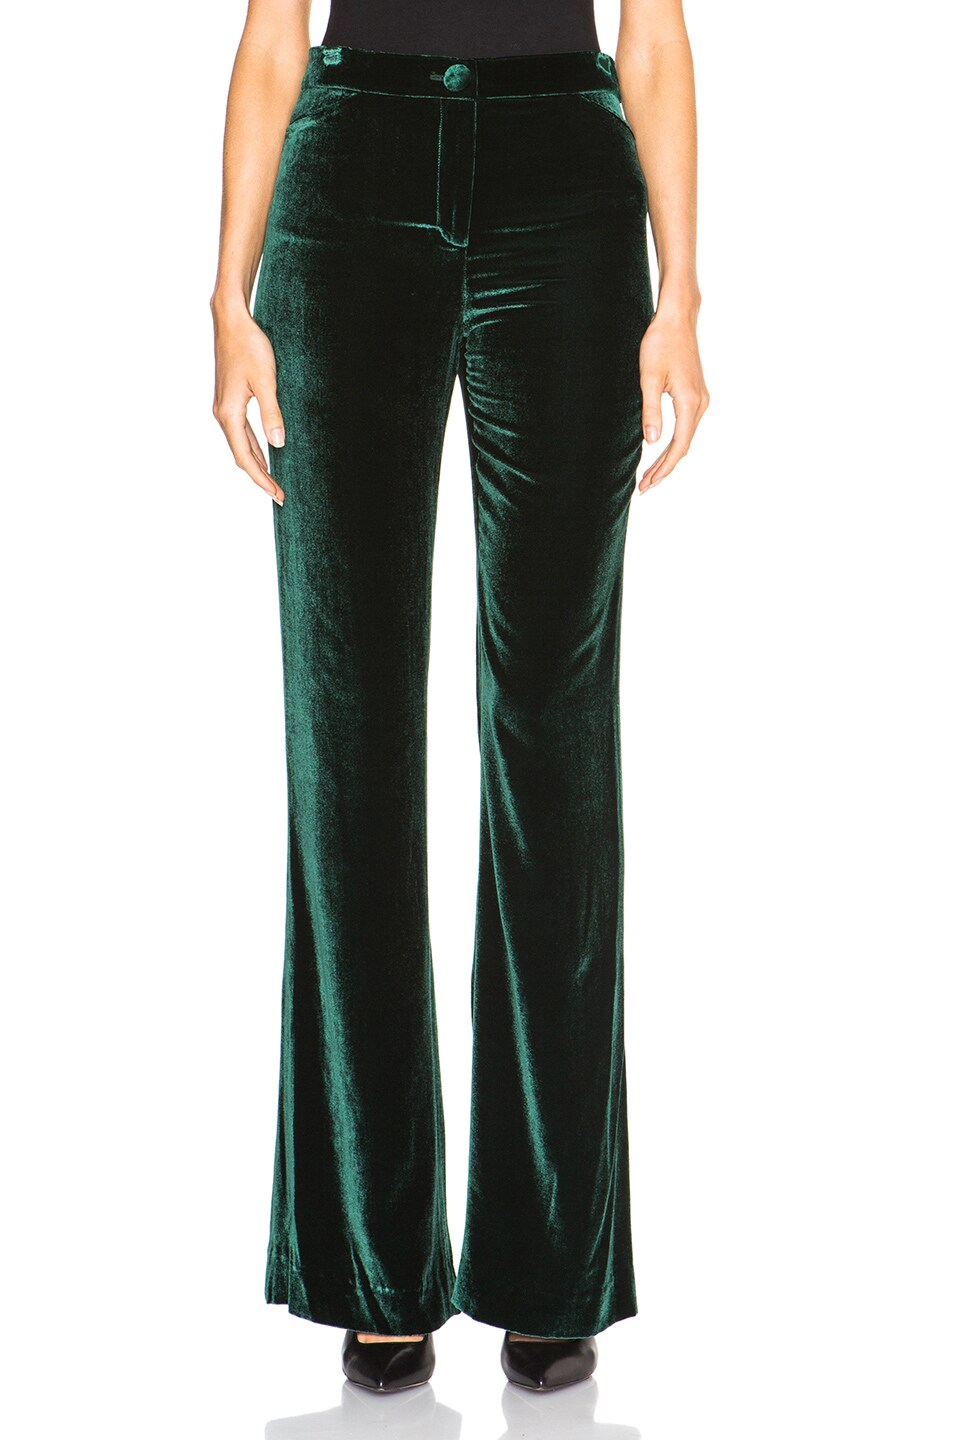 Cushnie Velvet High Waisted Pants in Emerald | FWRD